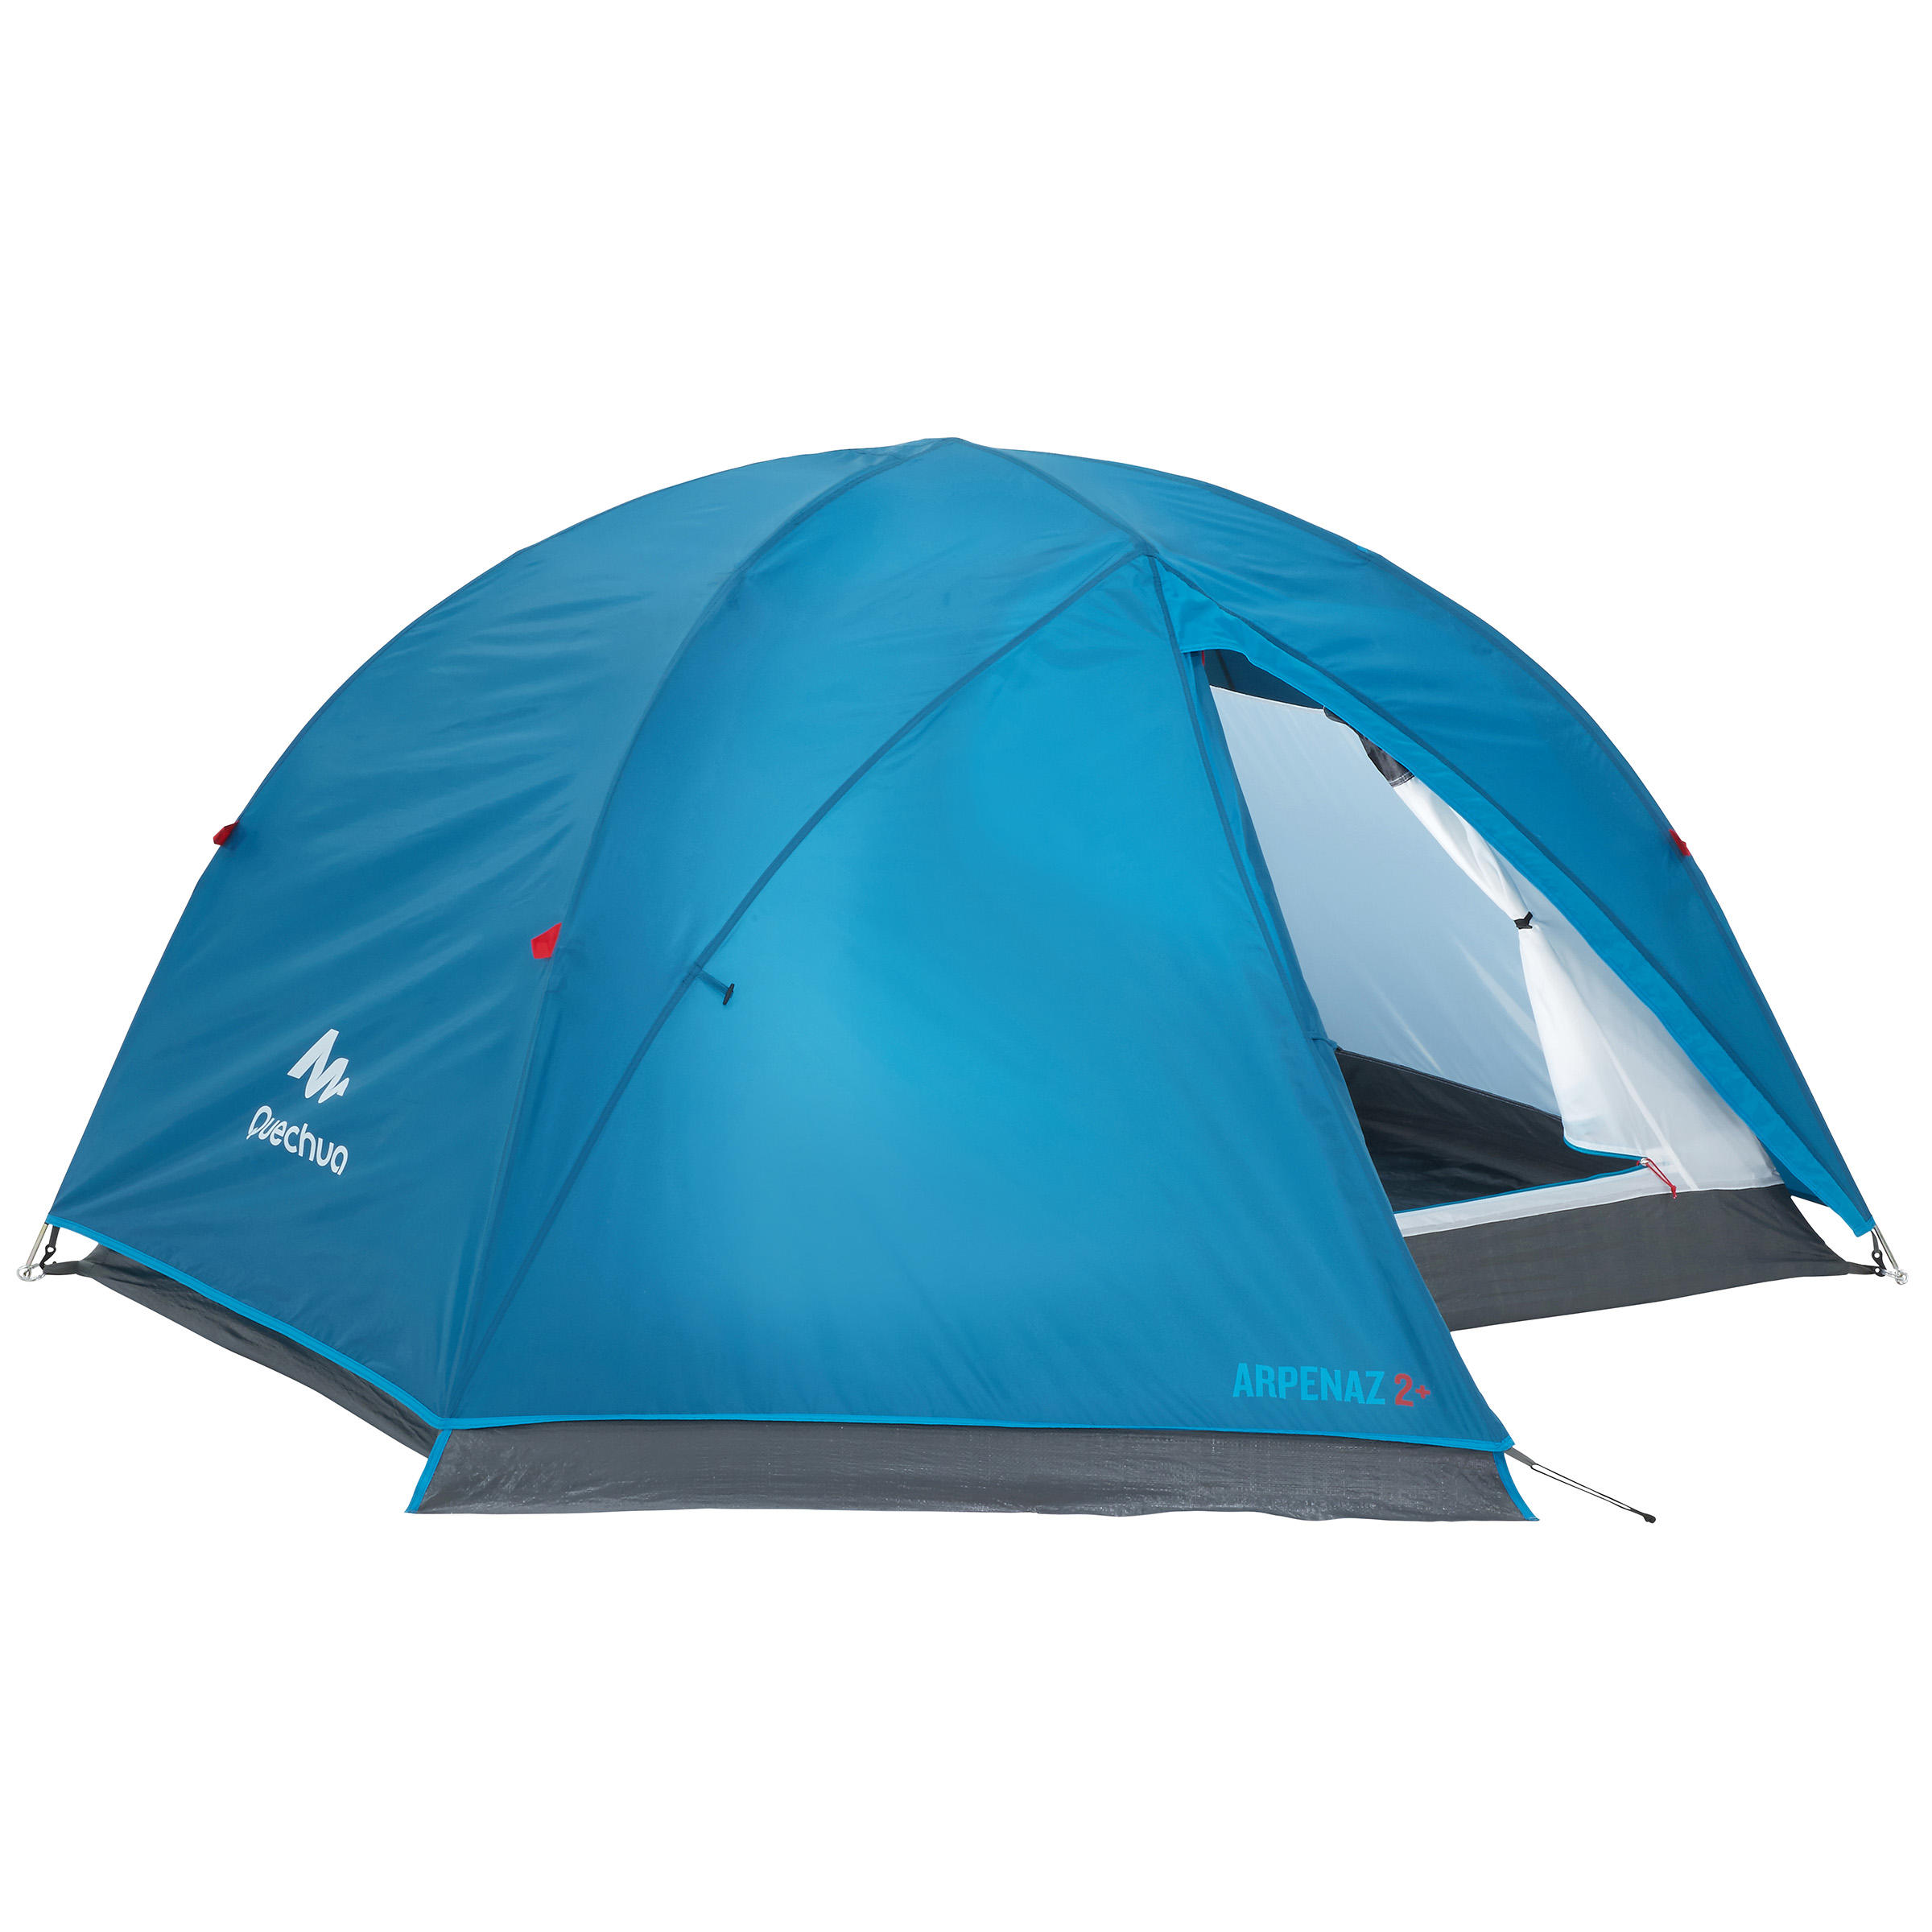 Hiking Tents: Arpenaz 2 Plus Tent 2 